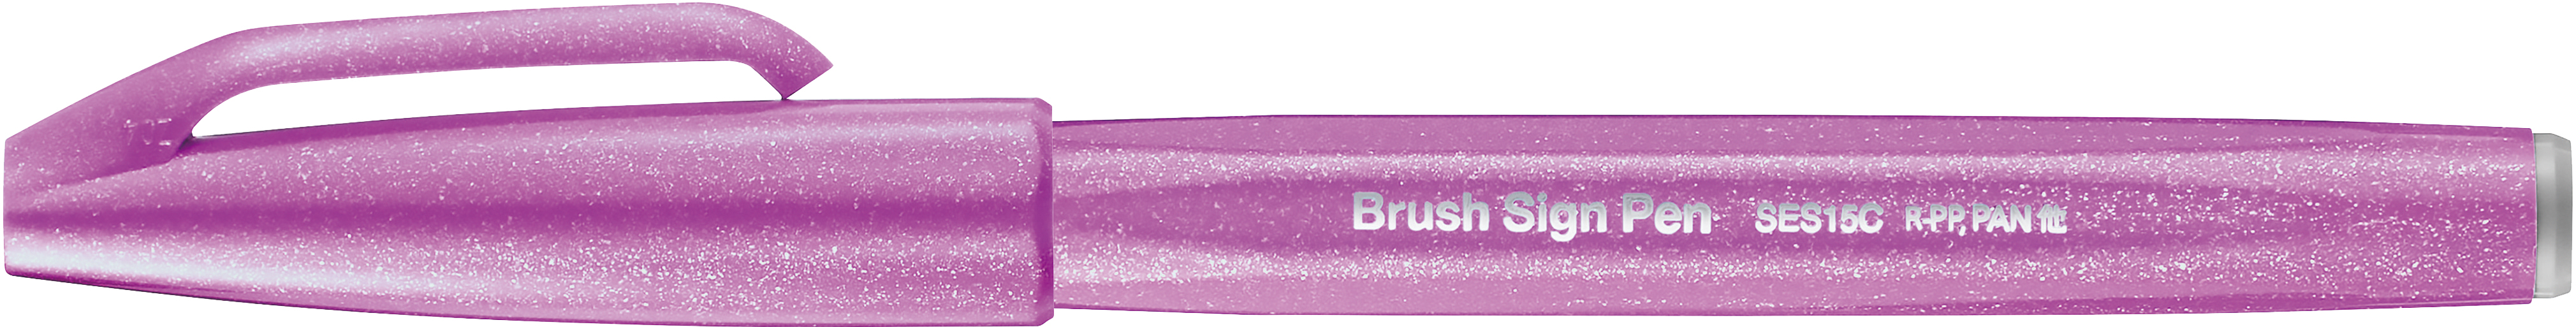 Pentel Brush Sign